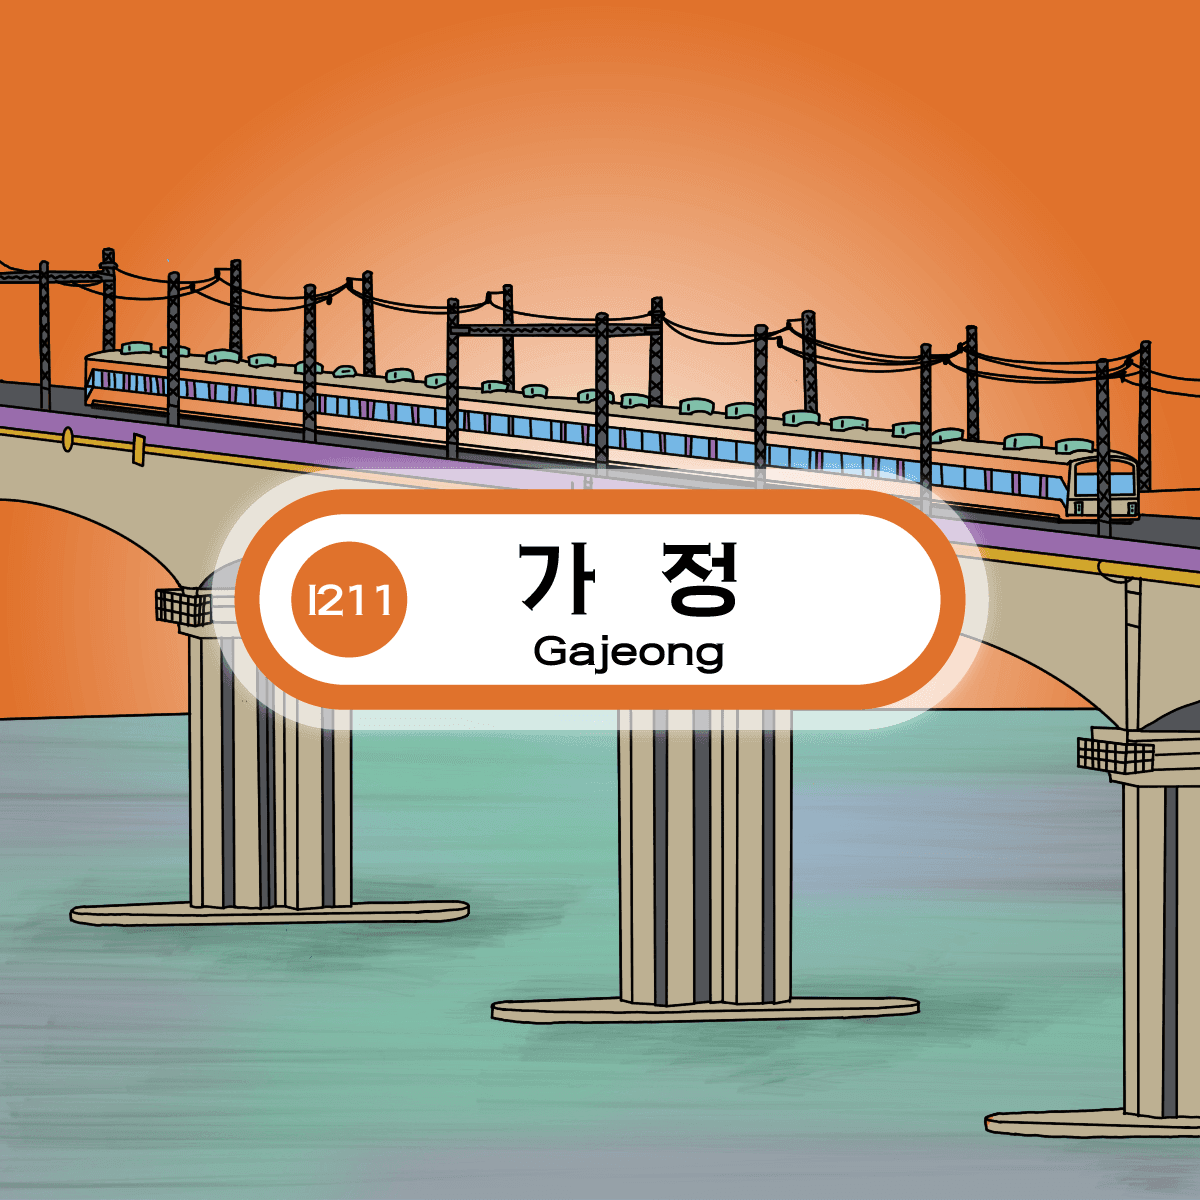 Gajeong